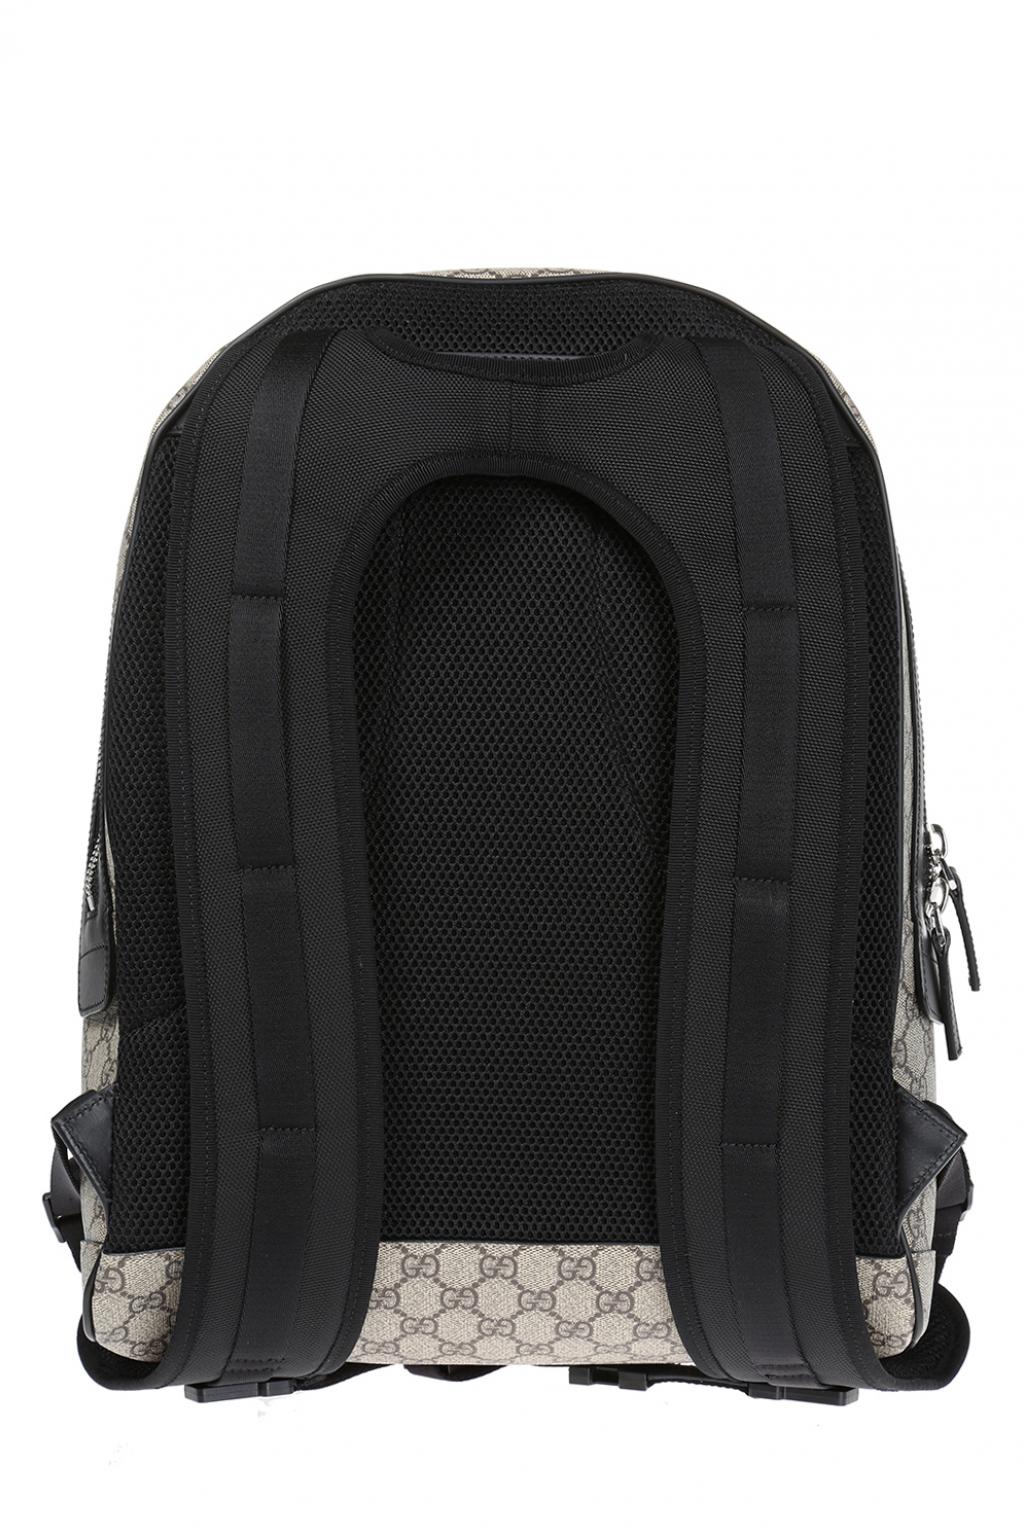 Brown 'GG Supreme' canvas backpack Gucci - Vitkac Canada